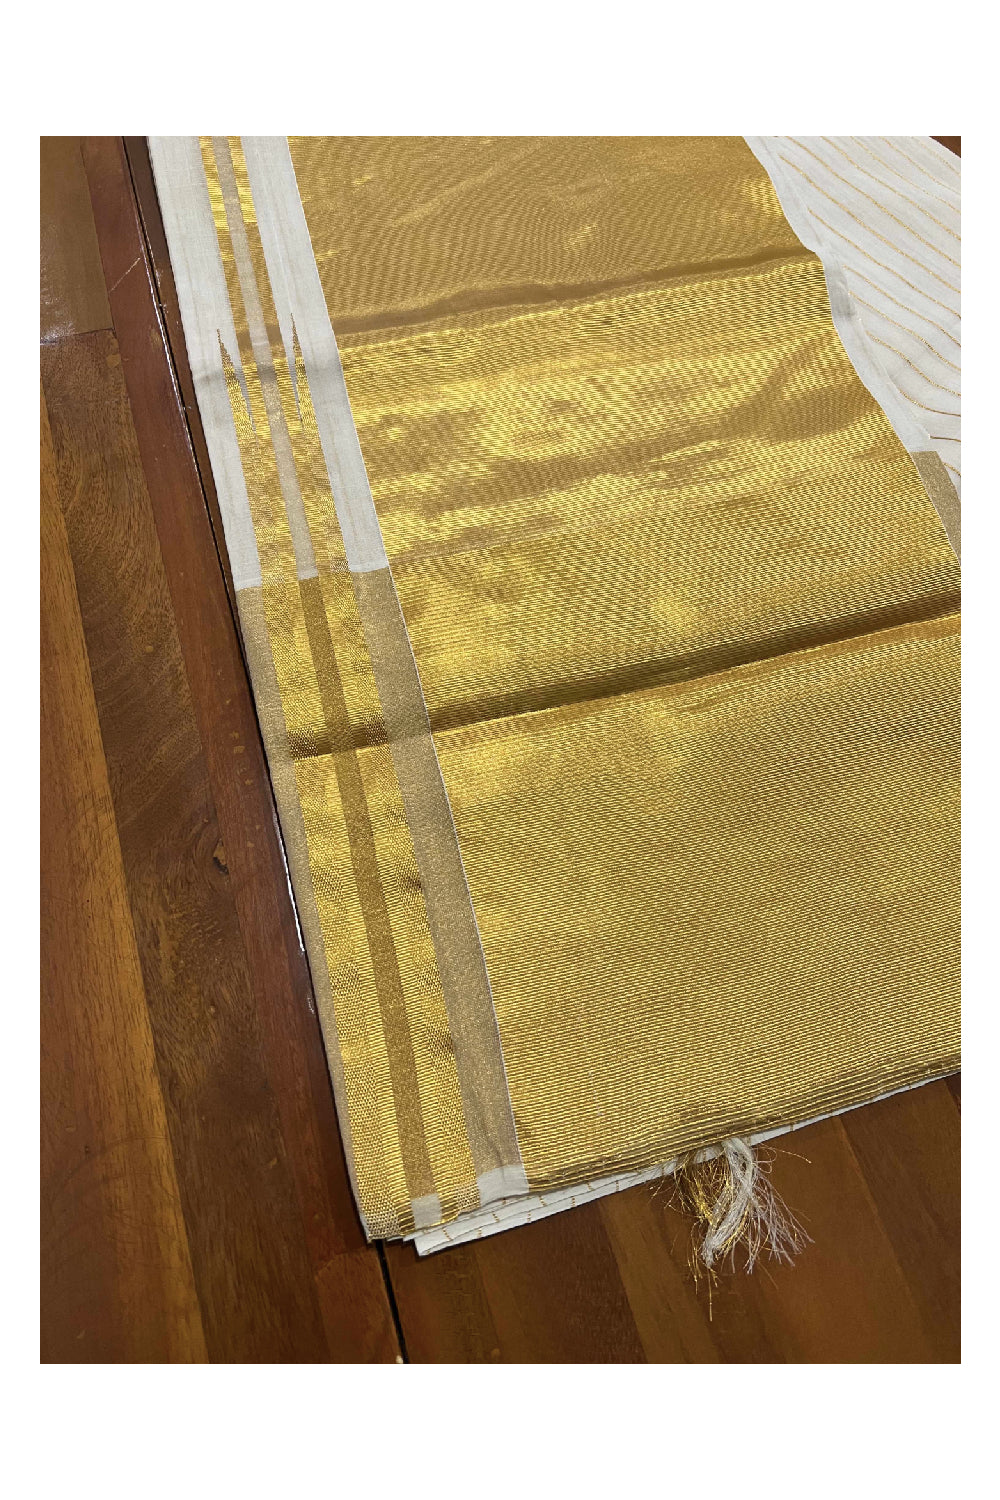 Southloom Premium Handloom Pure Cotton Stripes Work Saree with 10 inch Pallu